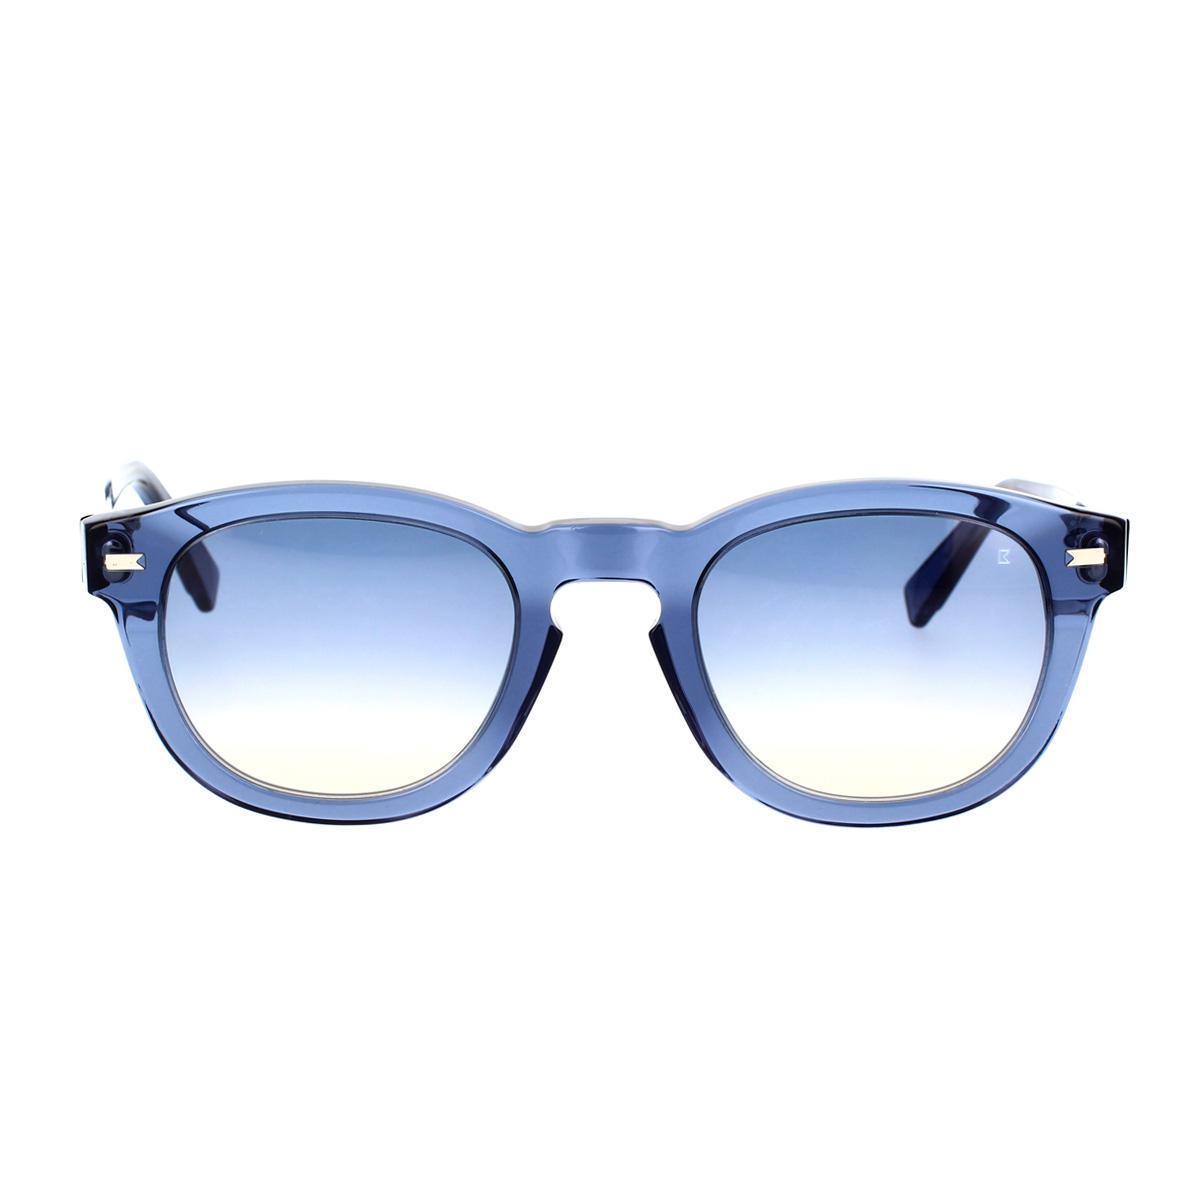 Bobsdrunk Sunglasses In Blue